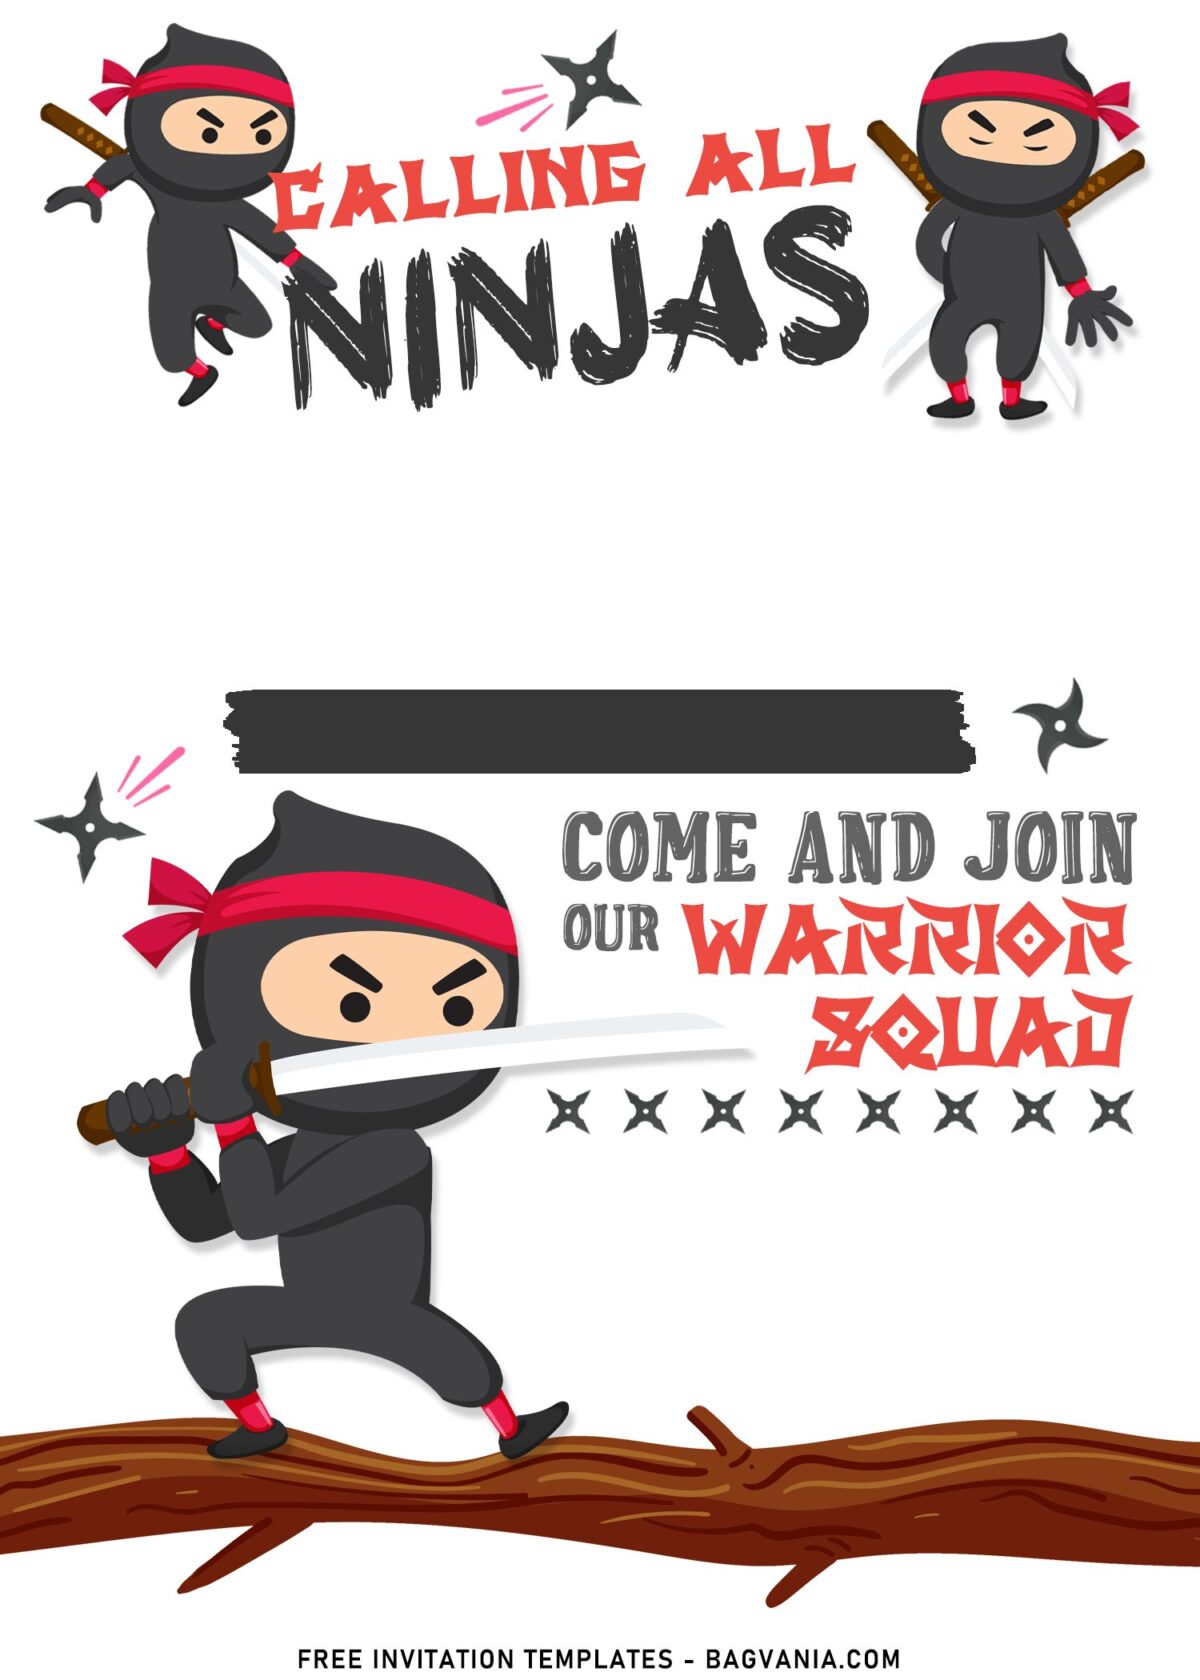 7+ Ninja Themed Birthday Invitation Templates For The Boys Birthday with Super awesome Ninja Poses